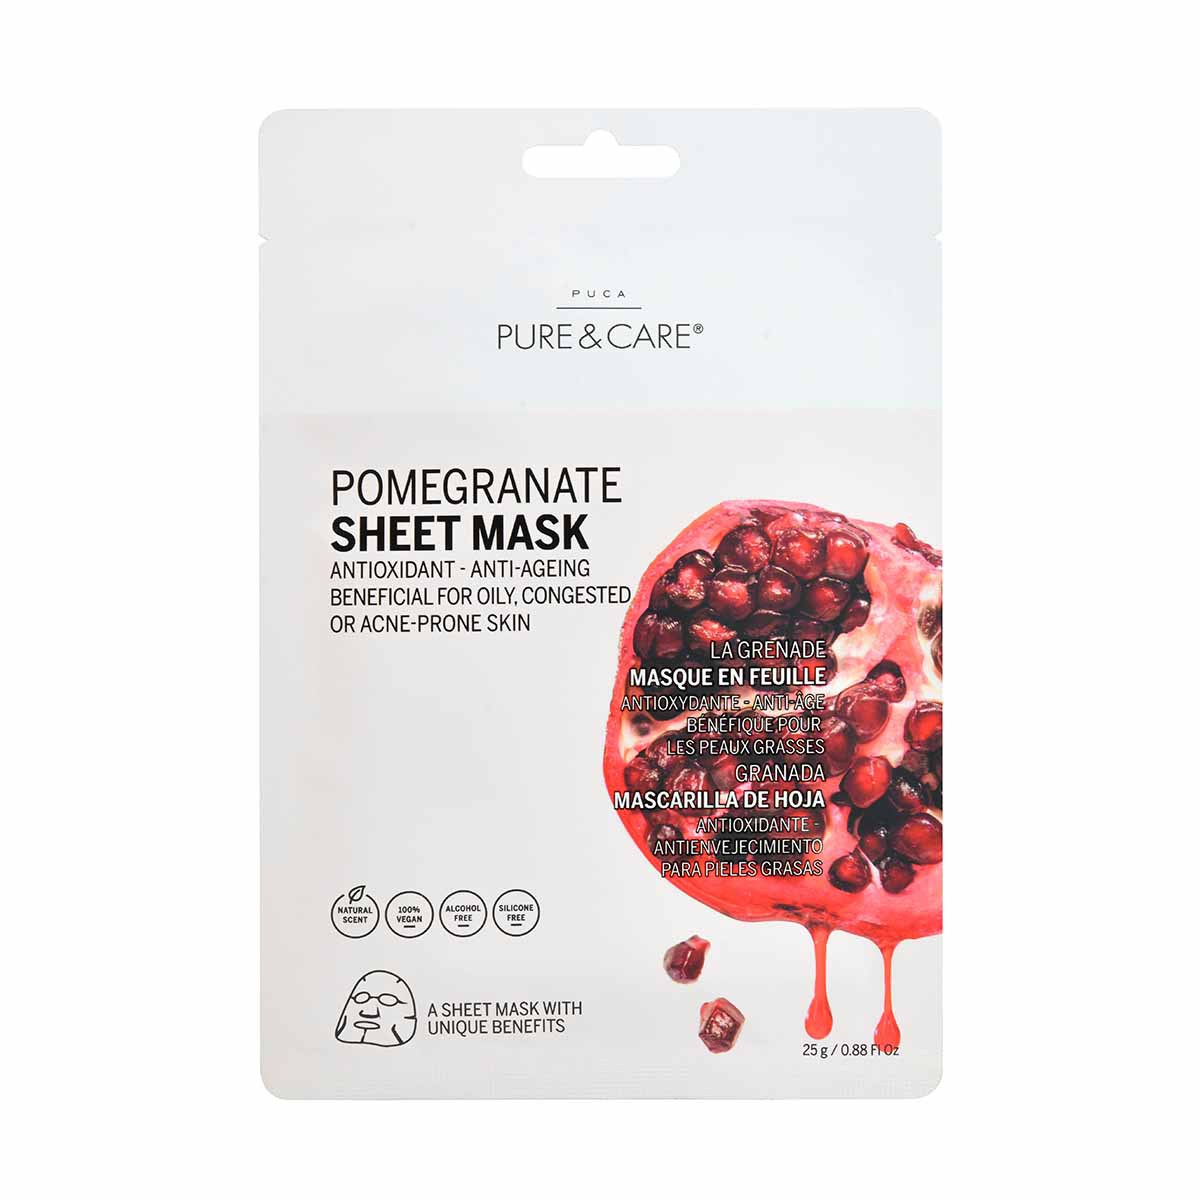 Pomegranate Antioxidant Sheet Mask I PUCA - PURE & CARE